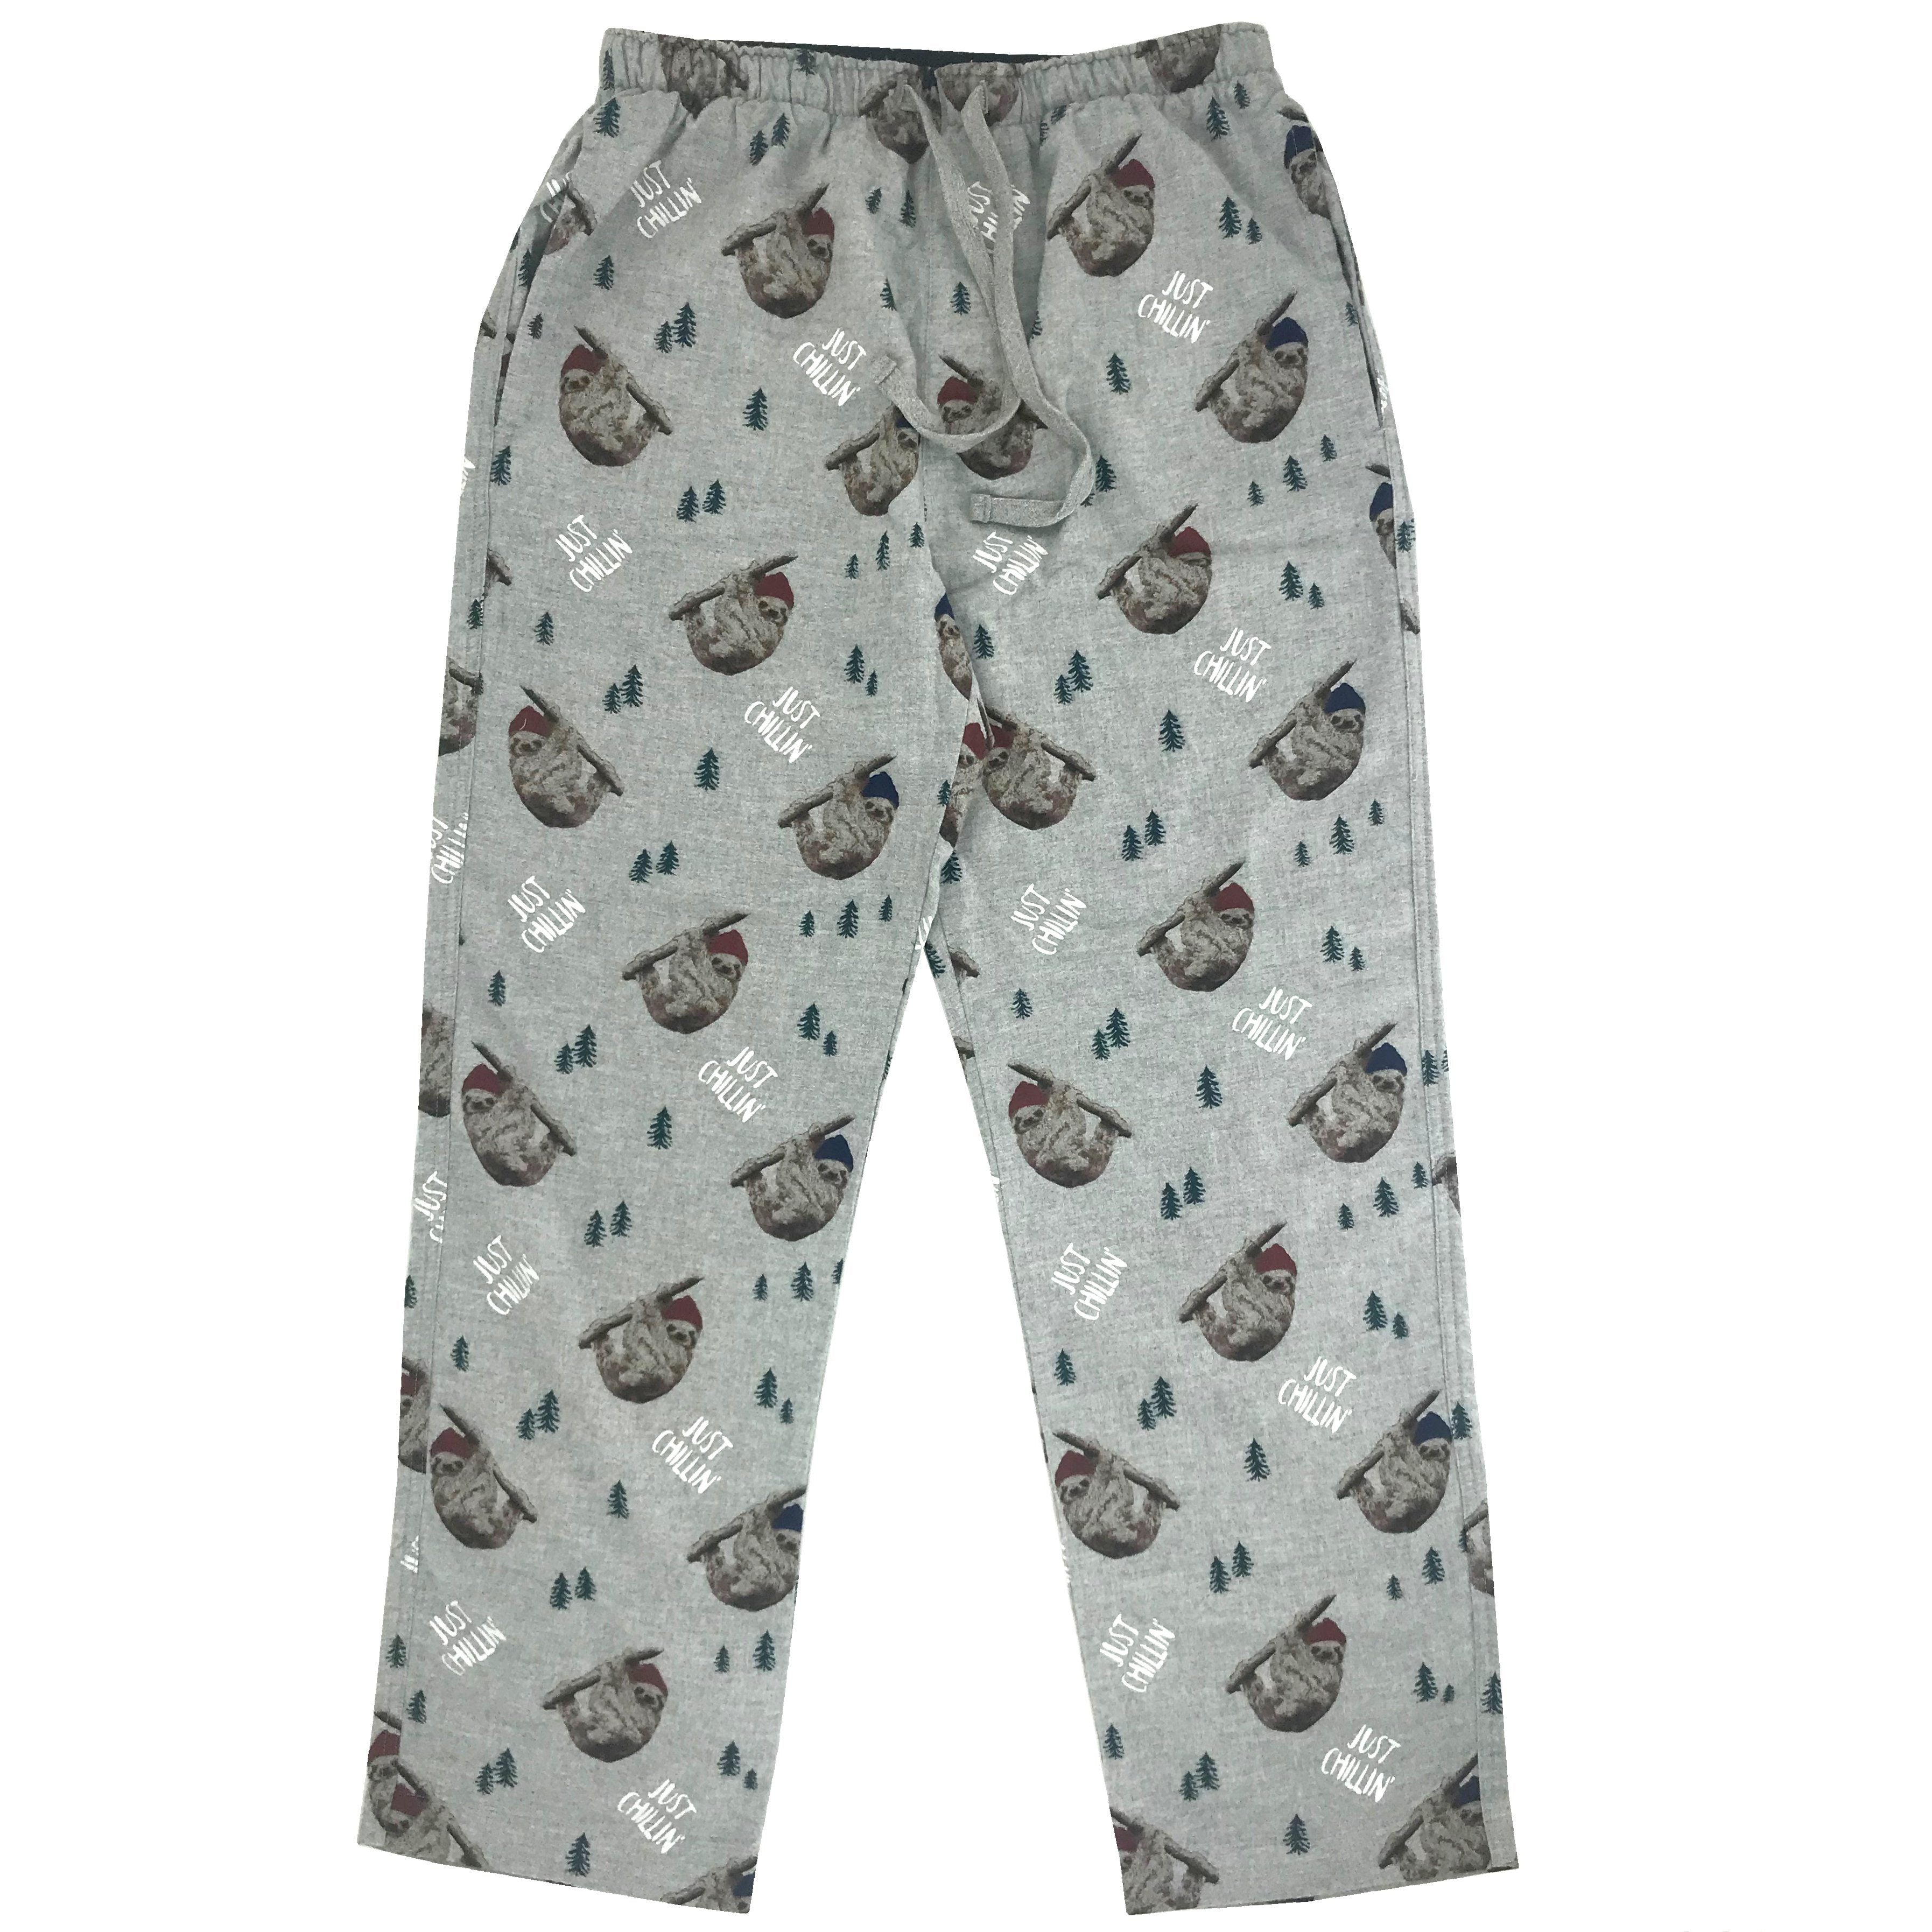 Super Soft Sloth Print Just Chillin Pattern Flannel Pajama Bottoms